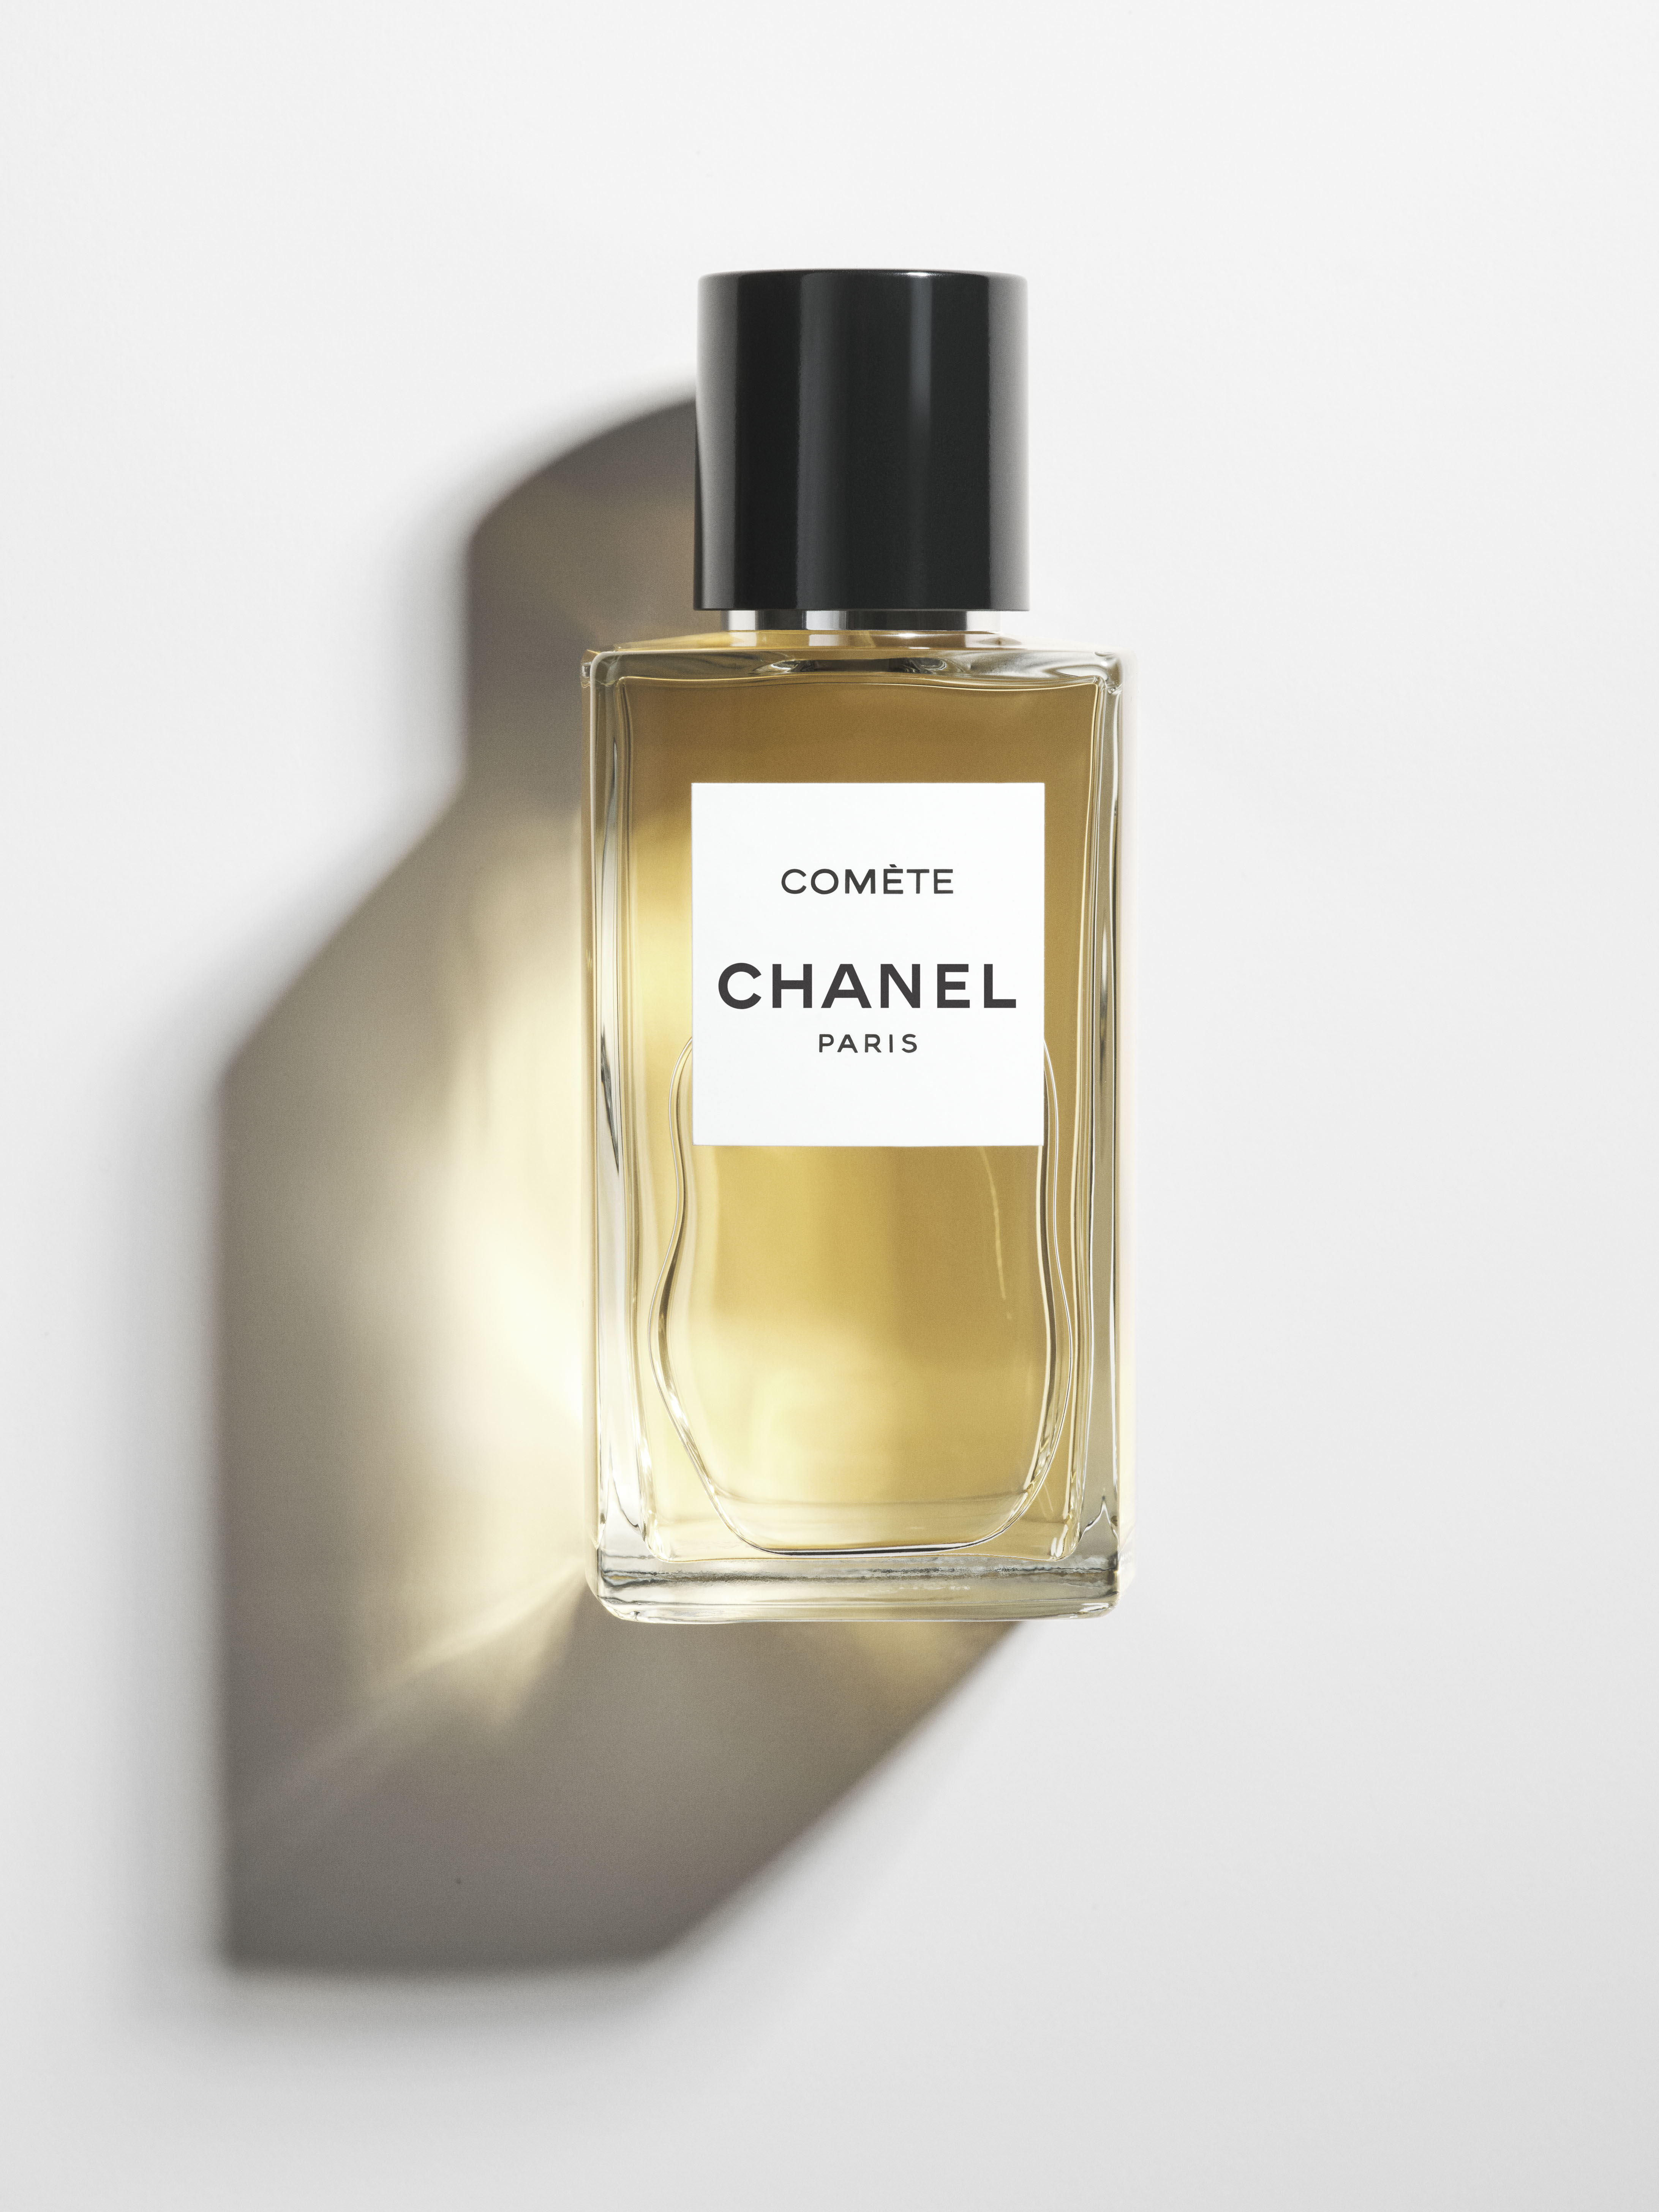 Chanel novi parfem hello magazine croatia hrvatska Chanel Comete